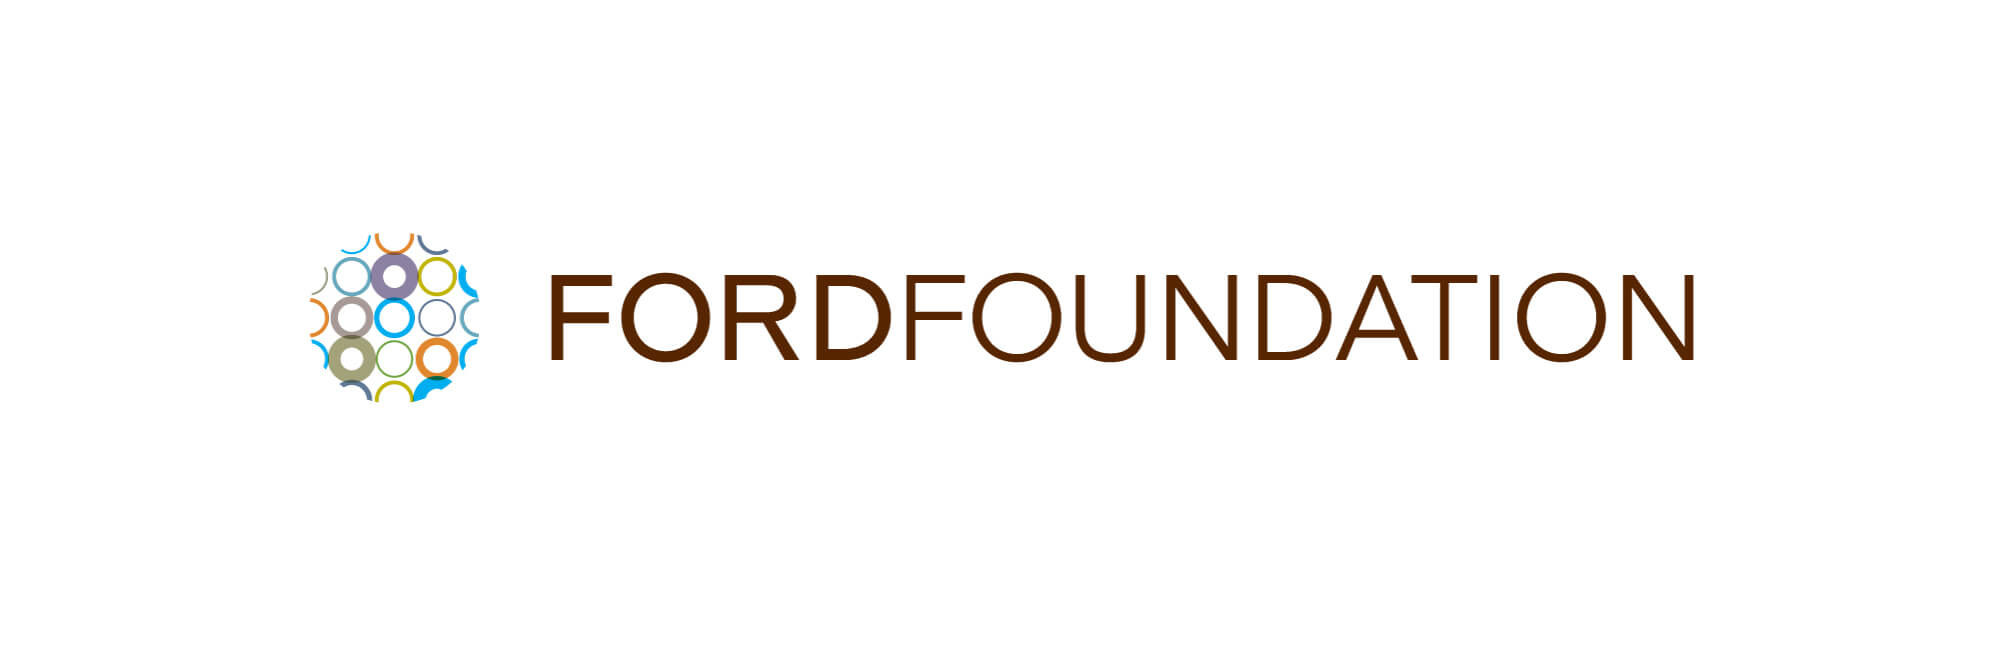 Ford foundation partnerships #6